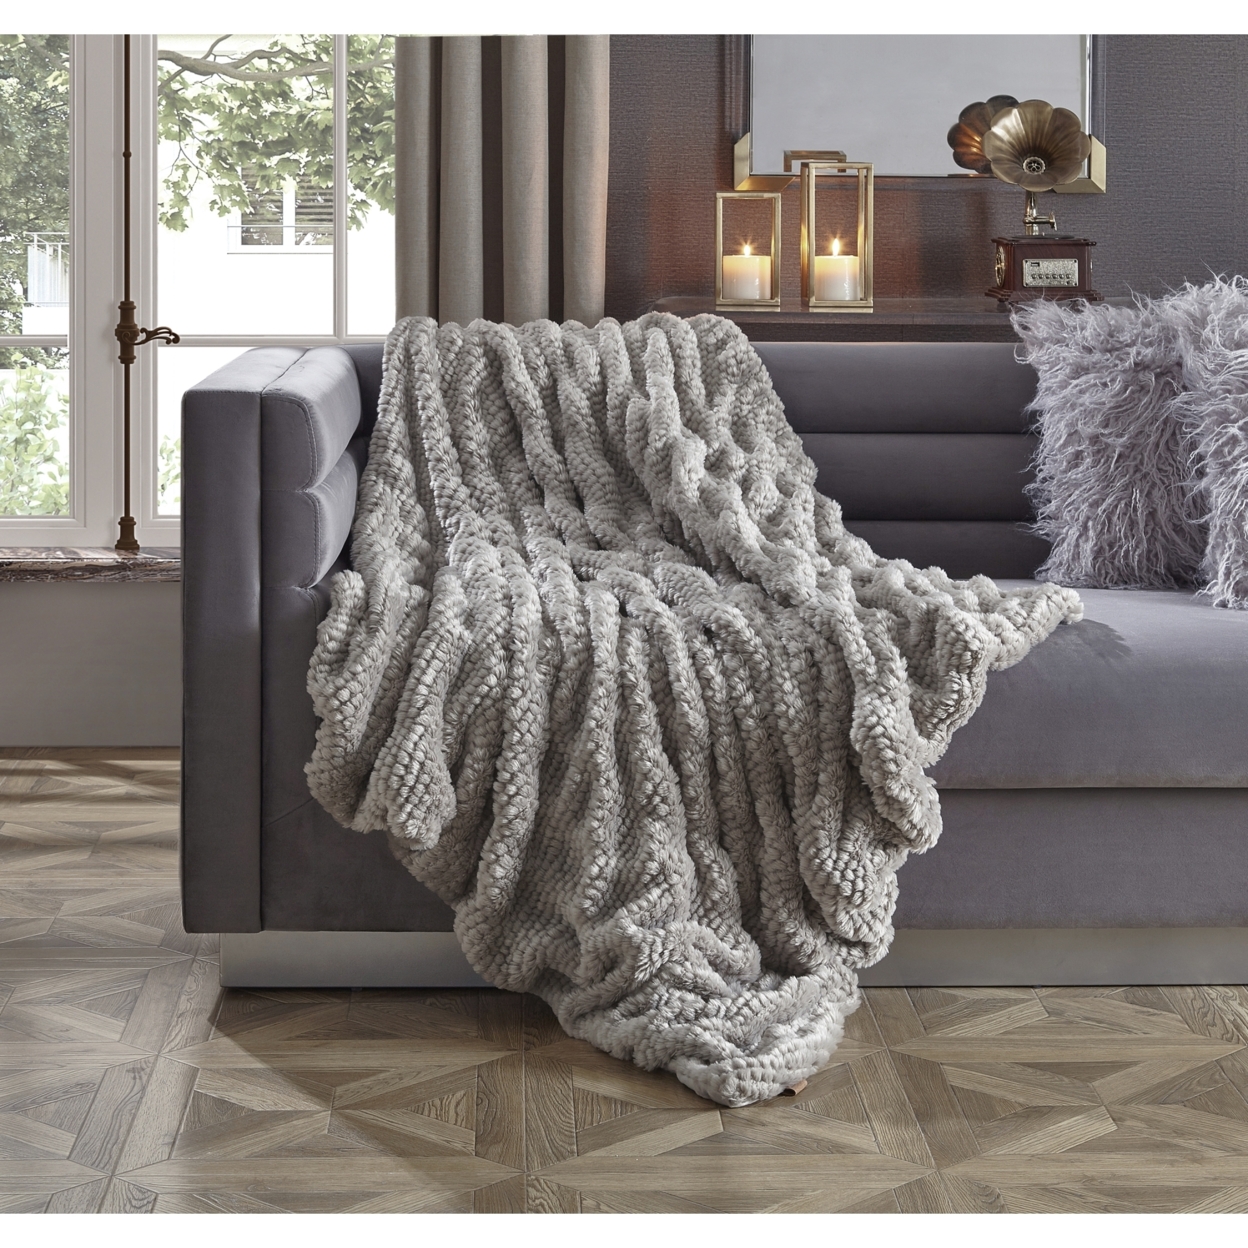 Noelia Throw-Extra Soft, Silk Touch-Honeycomb Texture-Exceptionally Cozy - Grey